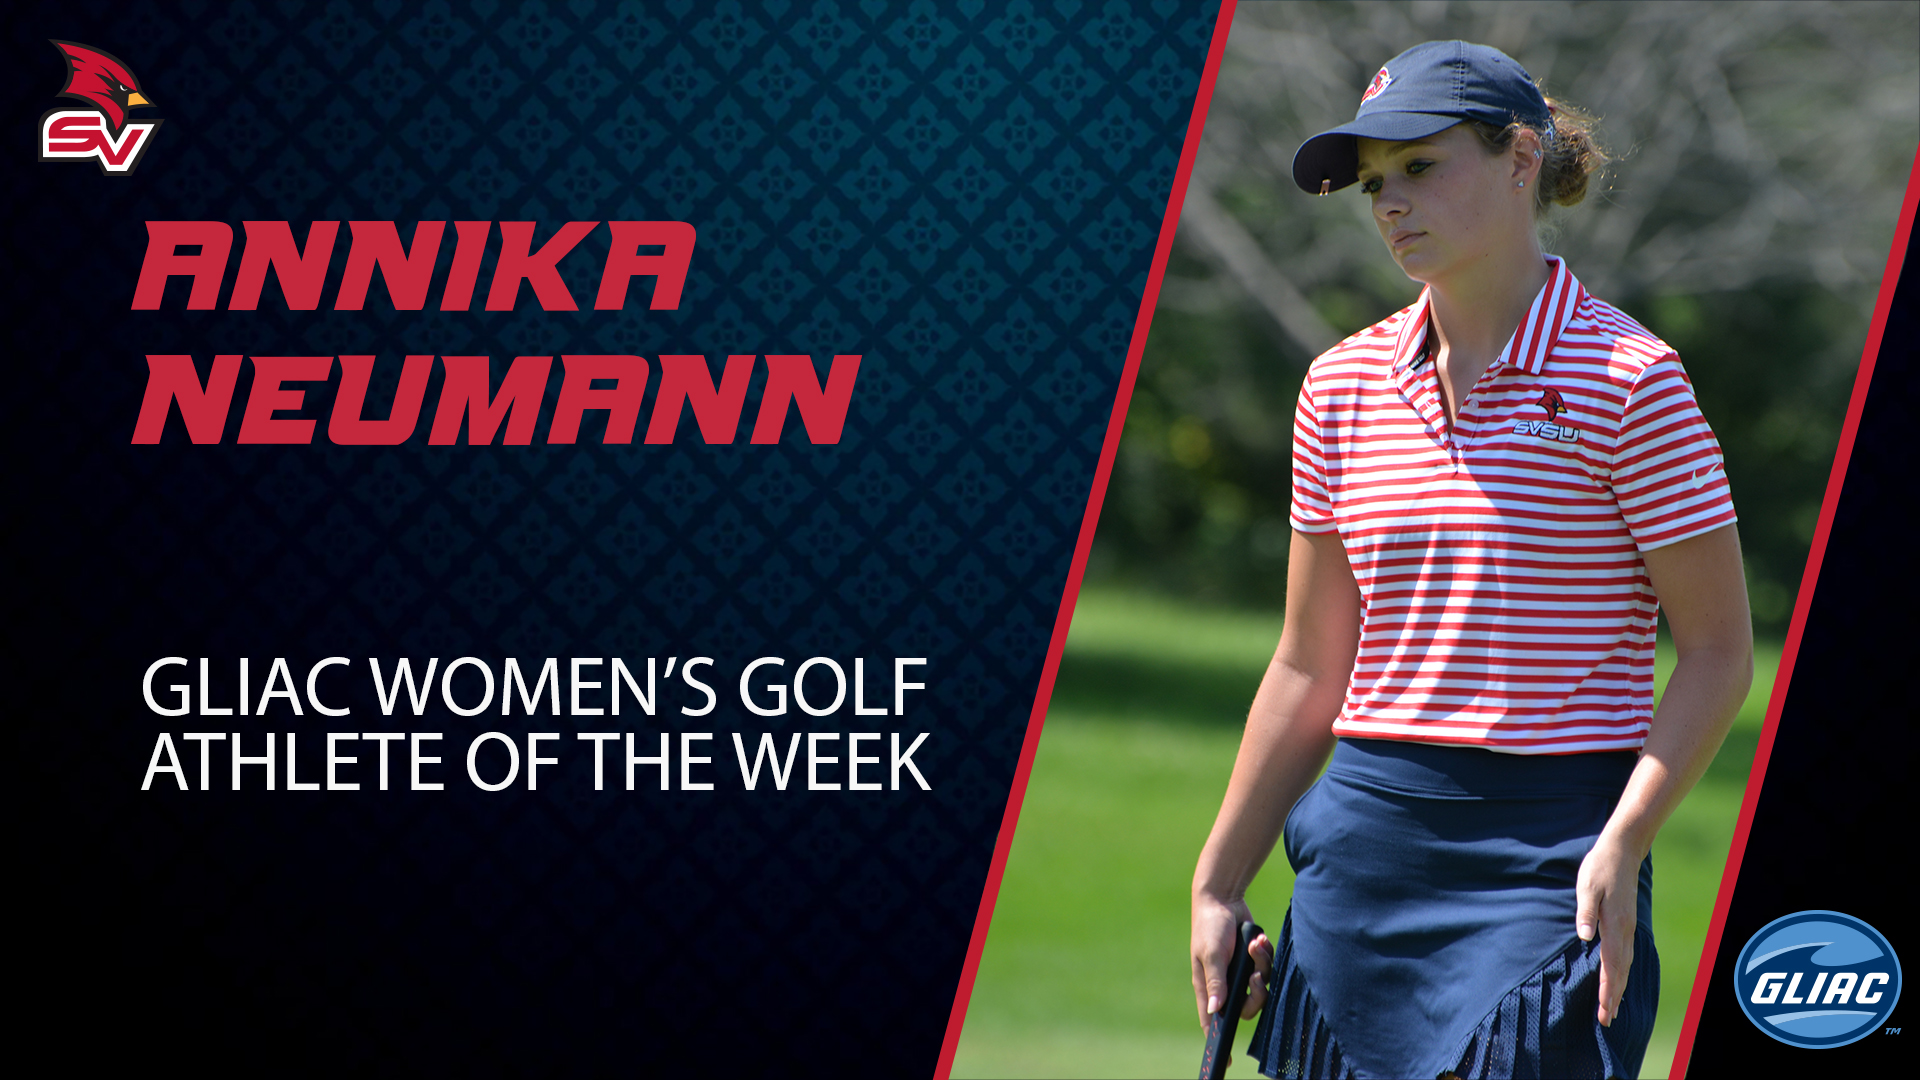 Annika Neumann earns GLIAC Women's Golfer of the Week honors